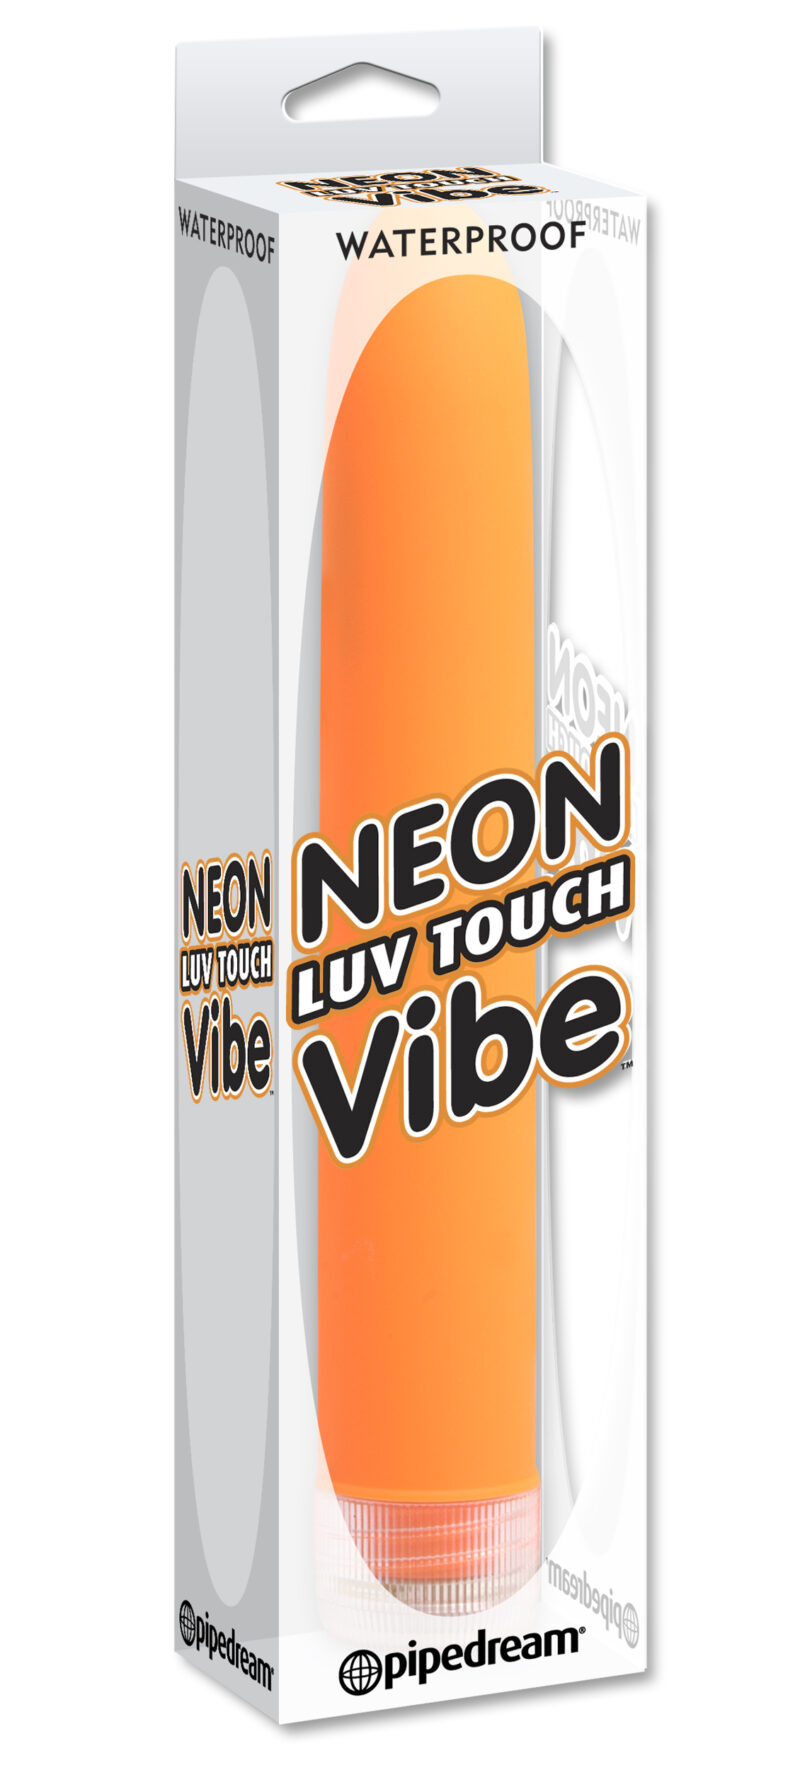 Pipedream Neon Luv Touch Vibe Orange